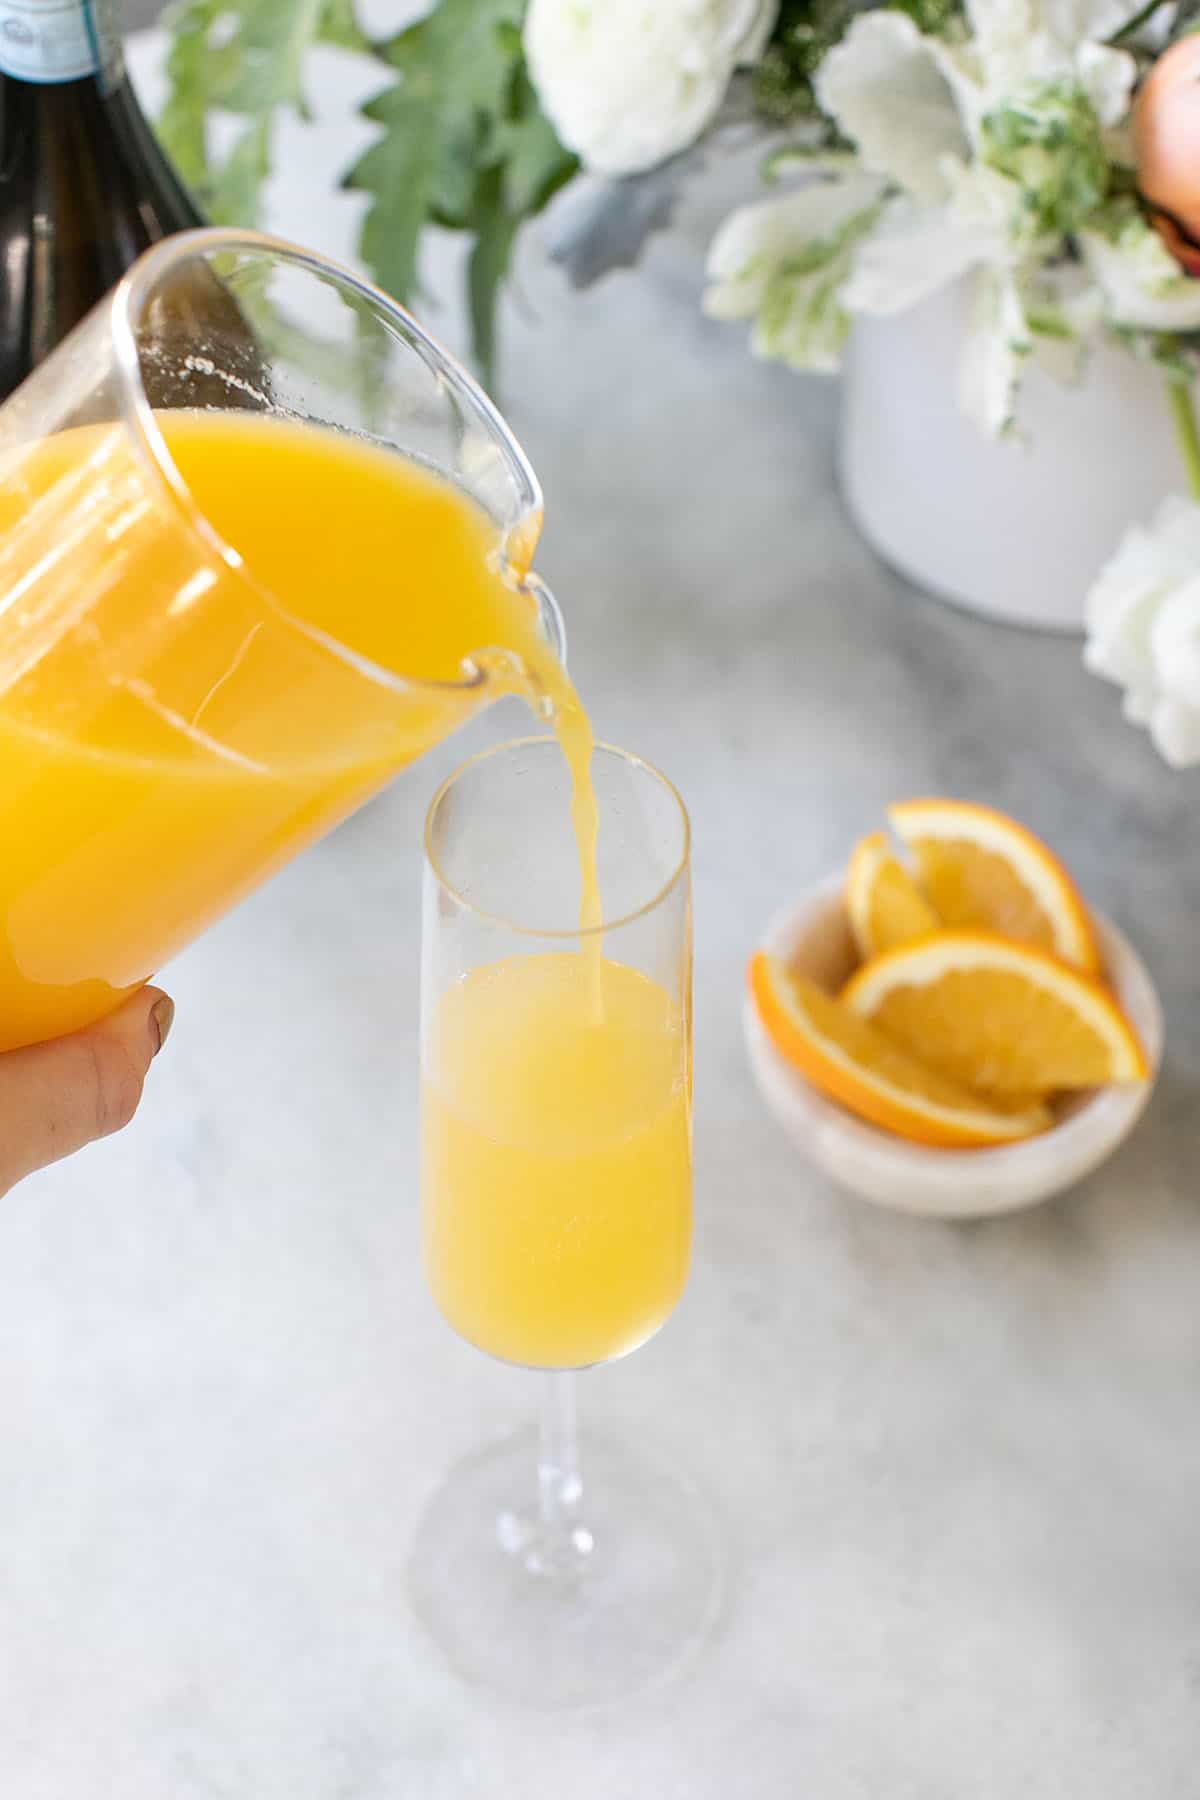 adding orange juice into a glass